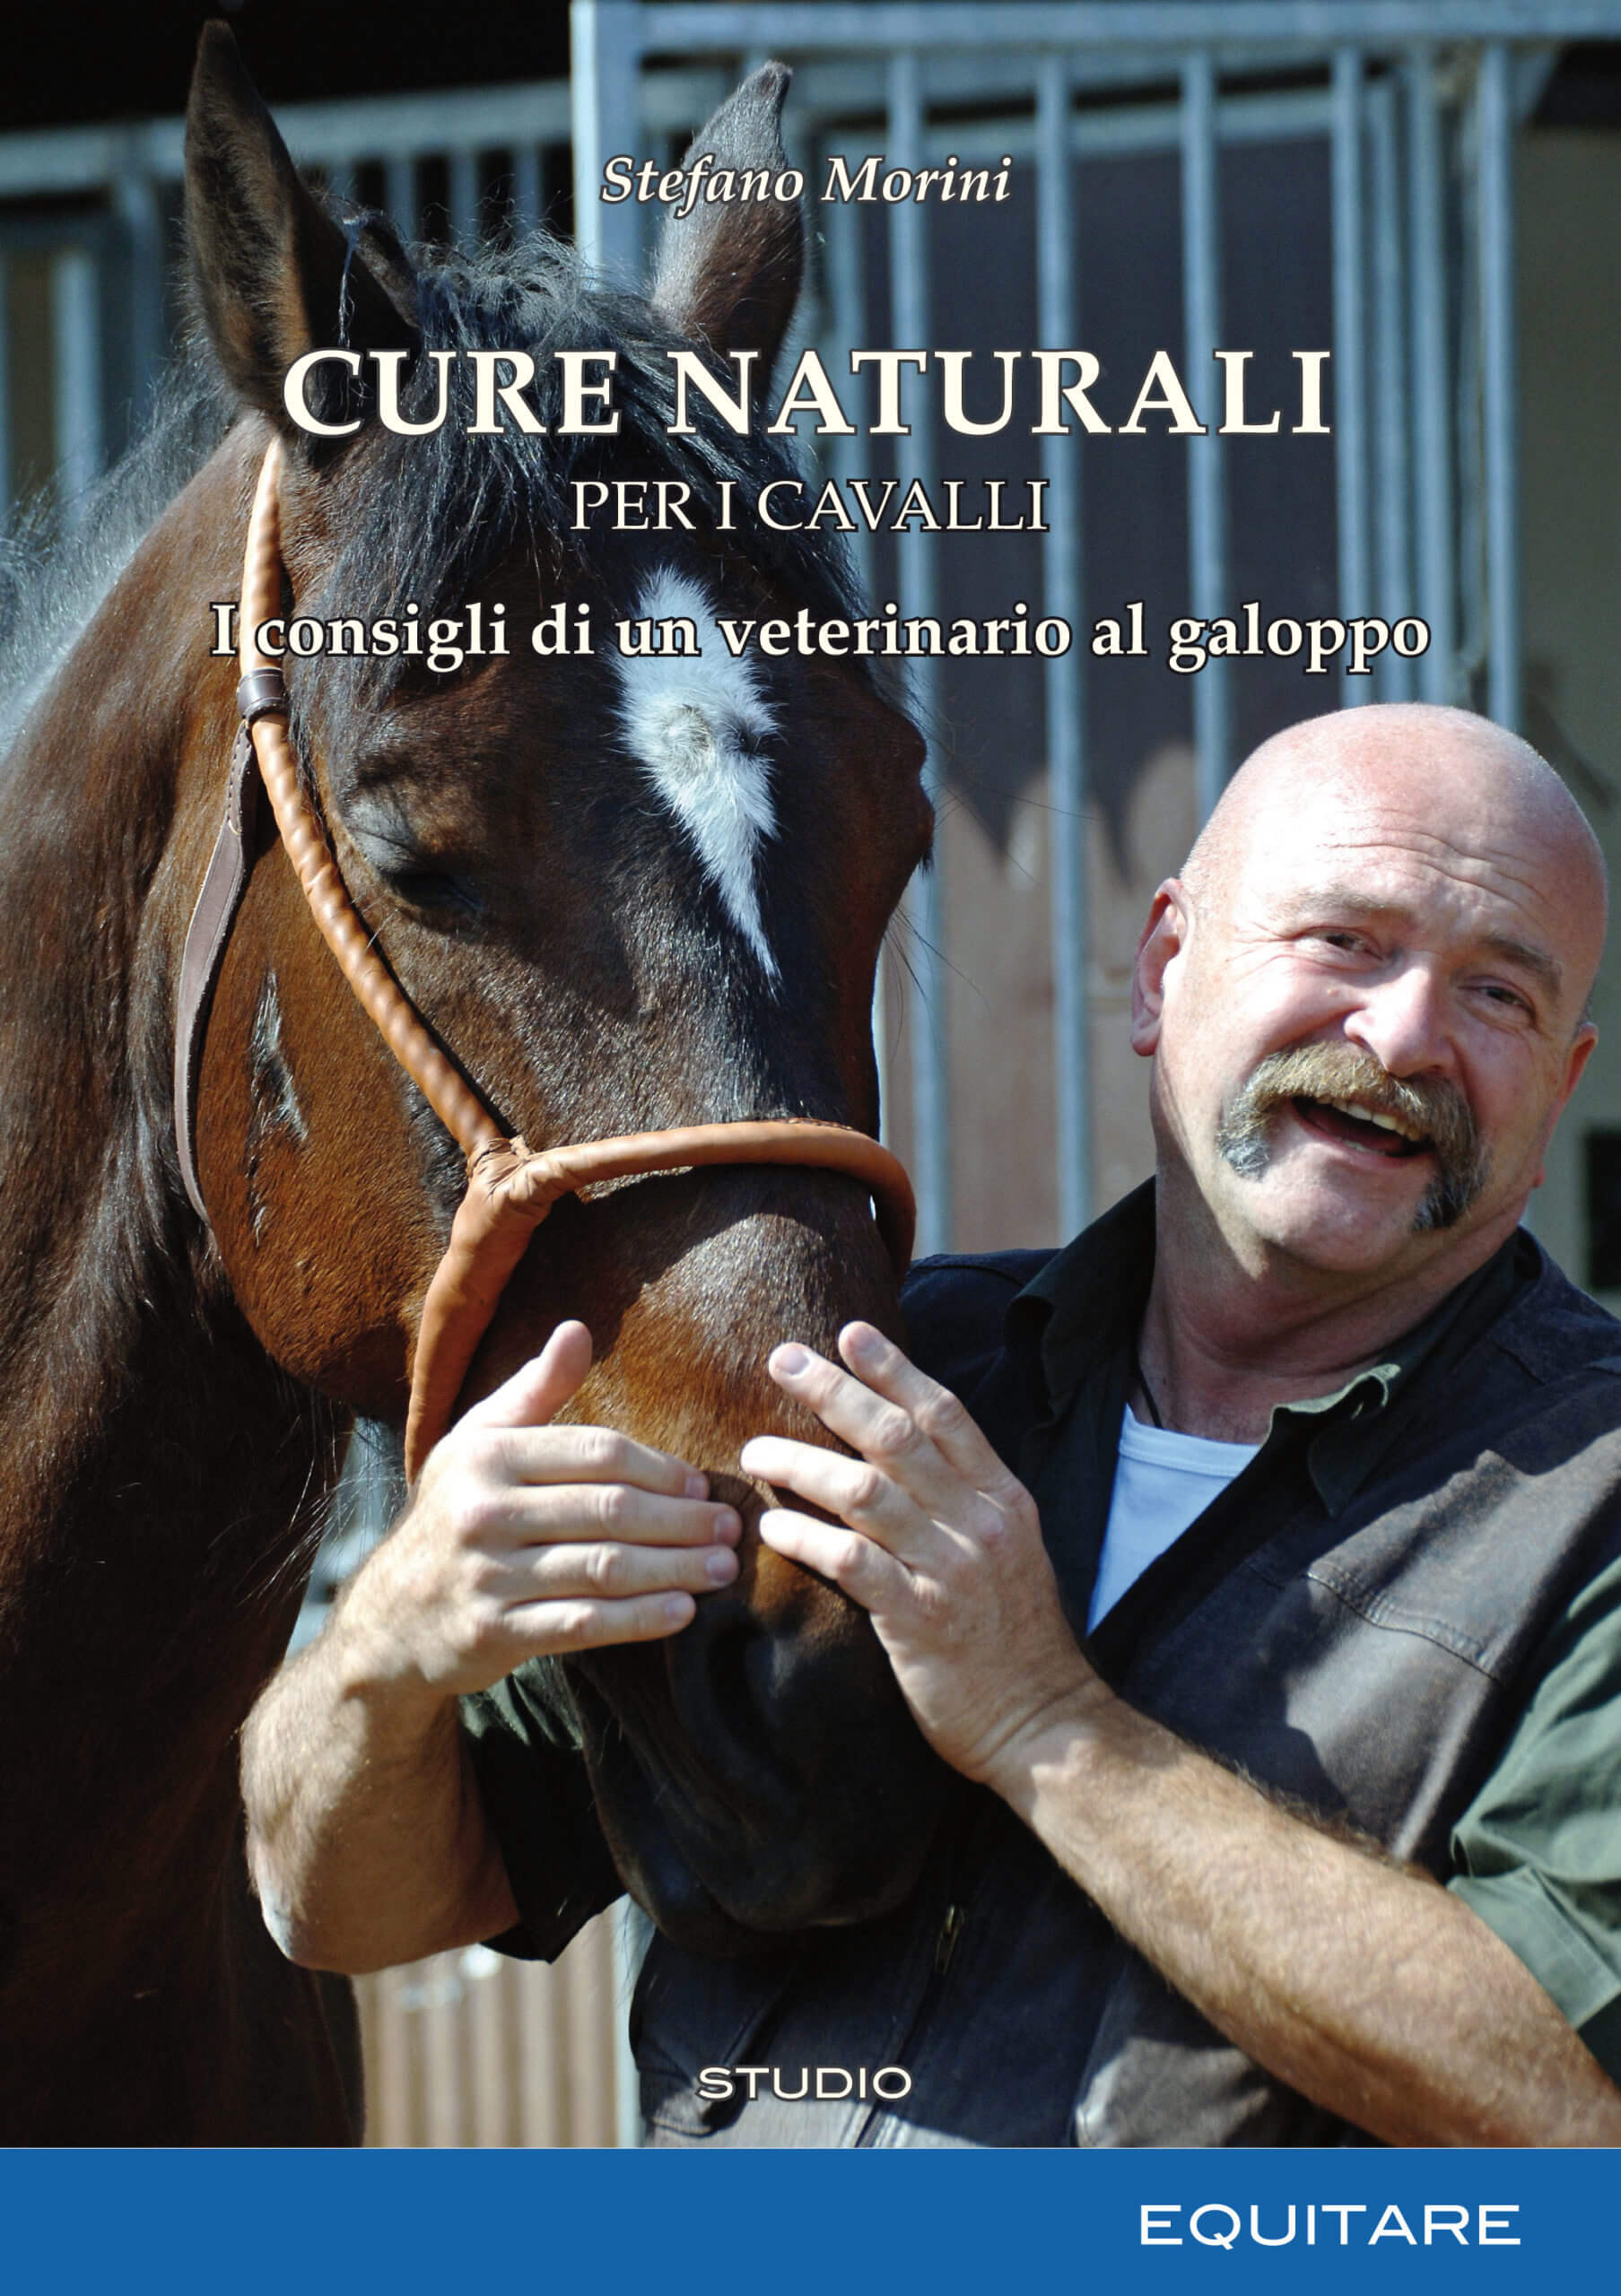 CURE NATURALI PER I CAVALLI - Stefano Morini